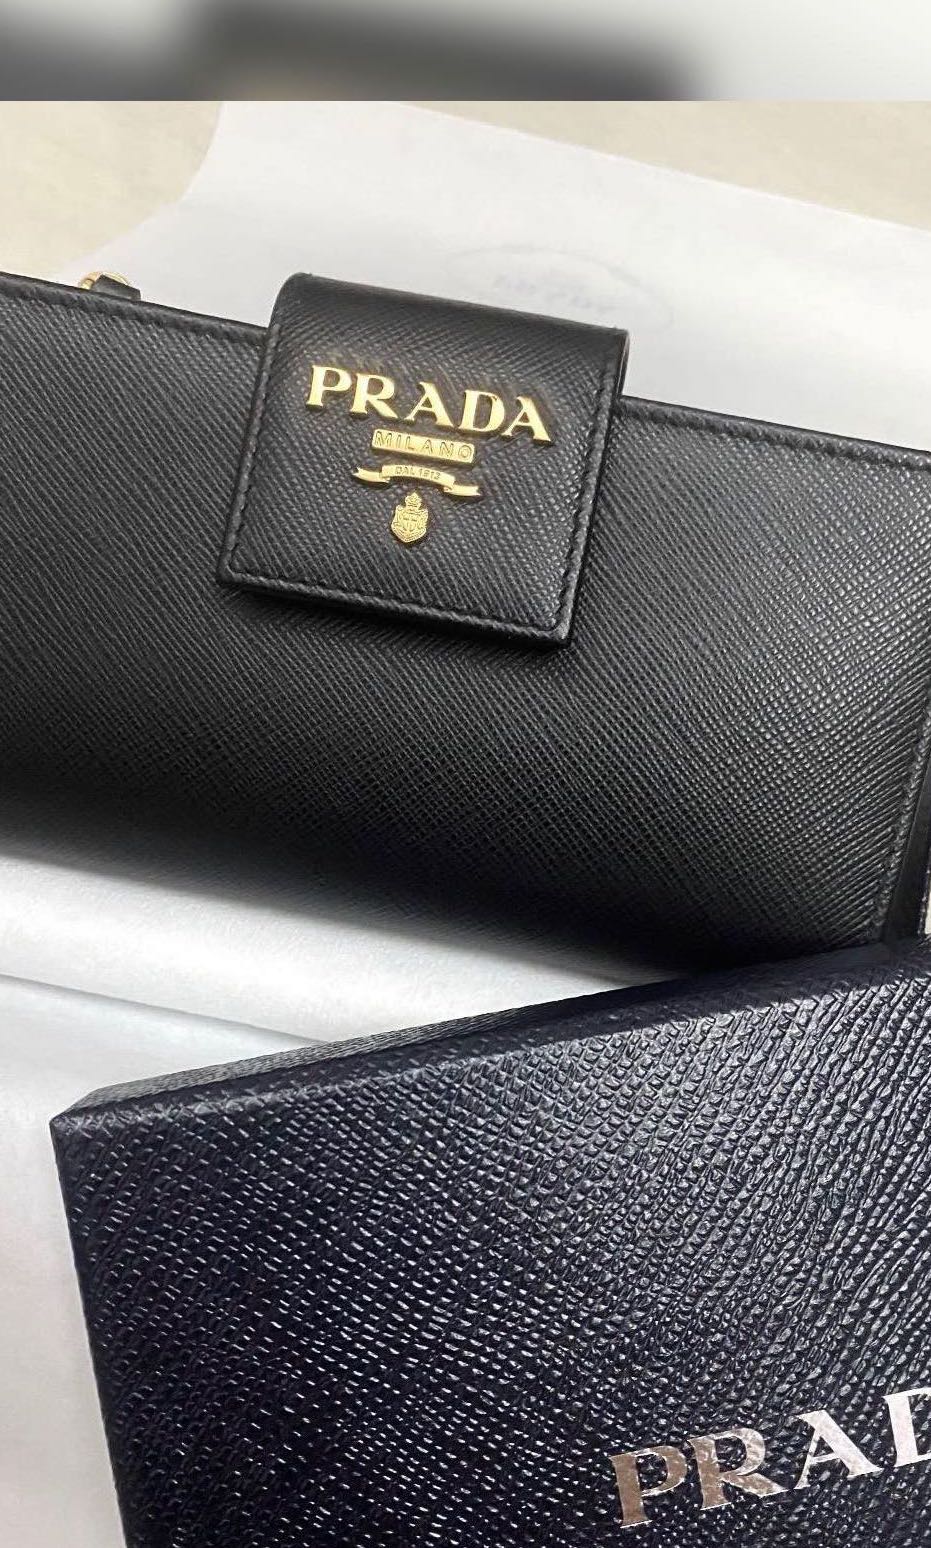 prada wallet authenticity check